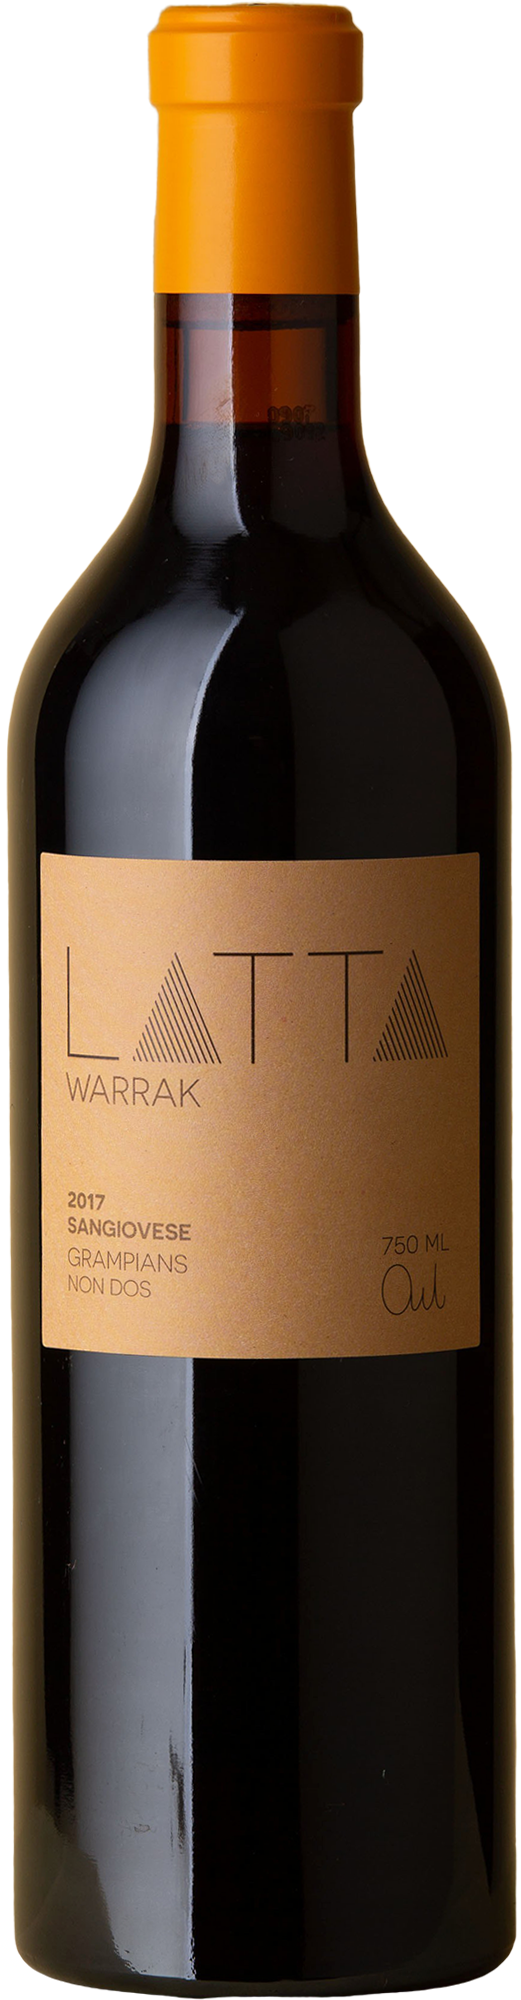 Latta - Warrak Sangiovese 2017 Red Wine